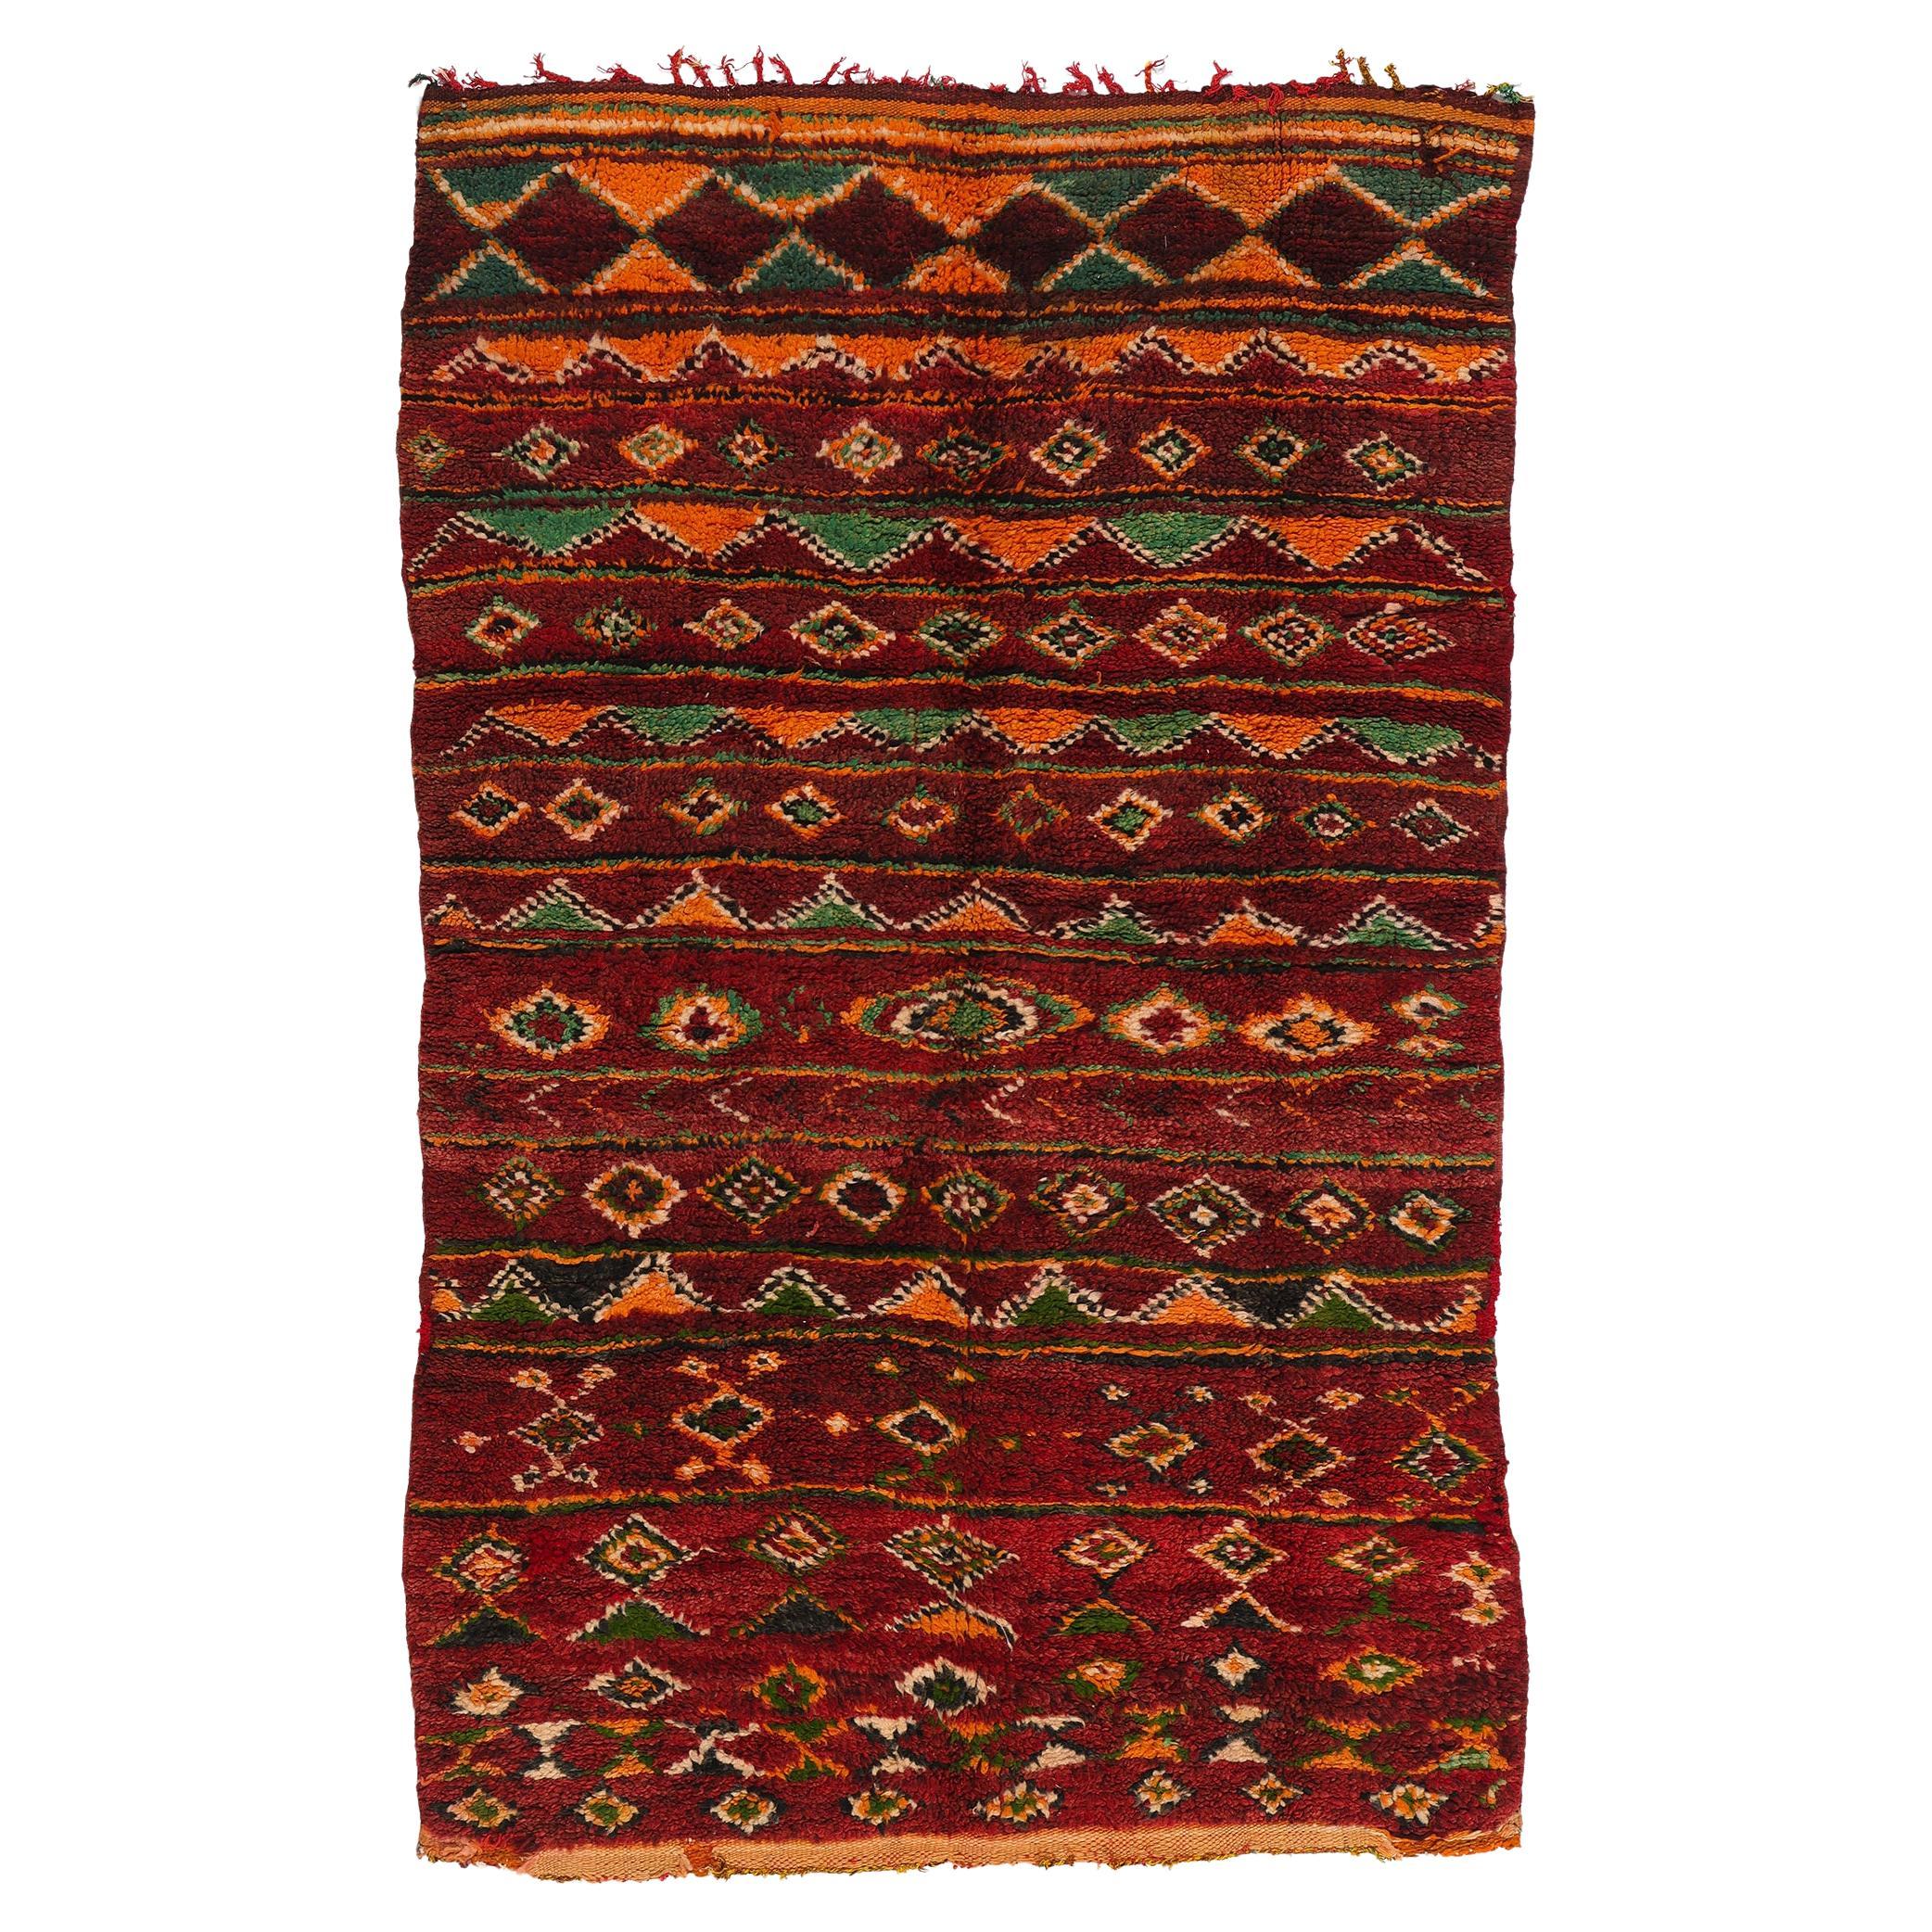 Vintage Boujad Moroccan Rug, Cozy Nomad Meets Southwest Bohemian